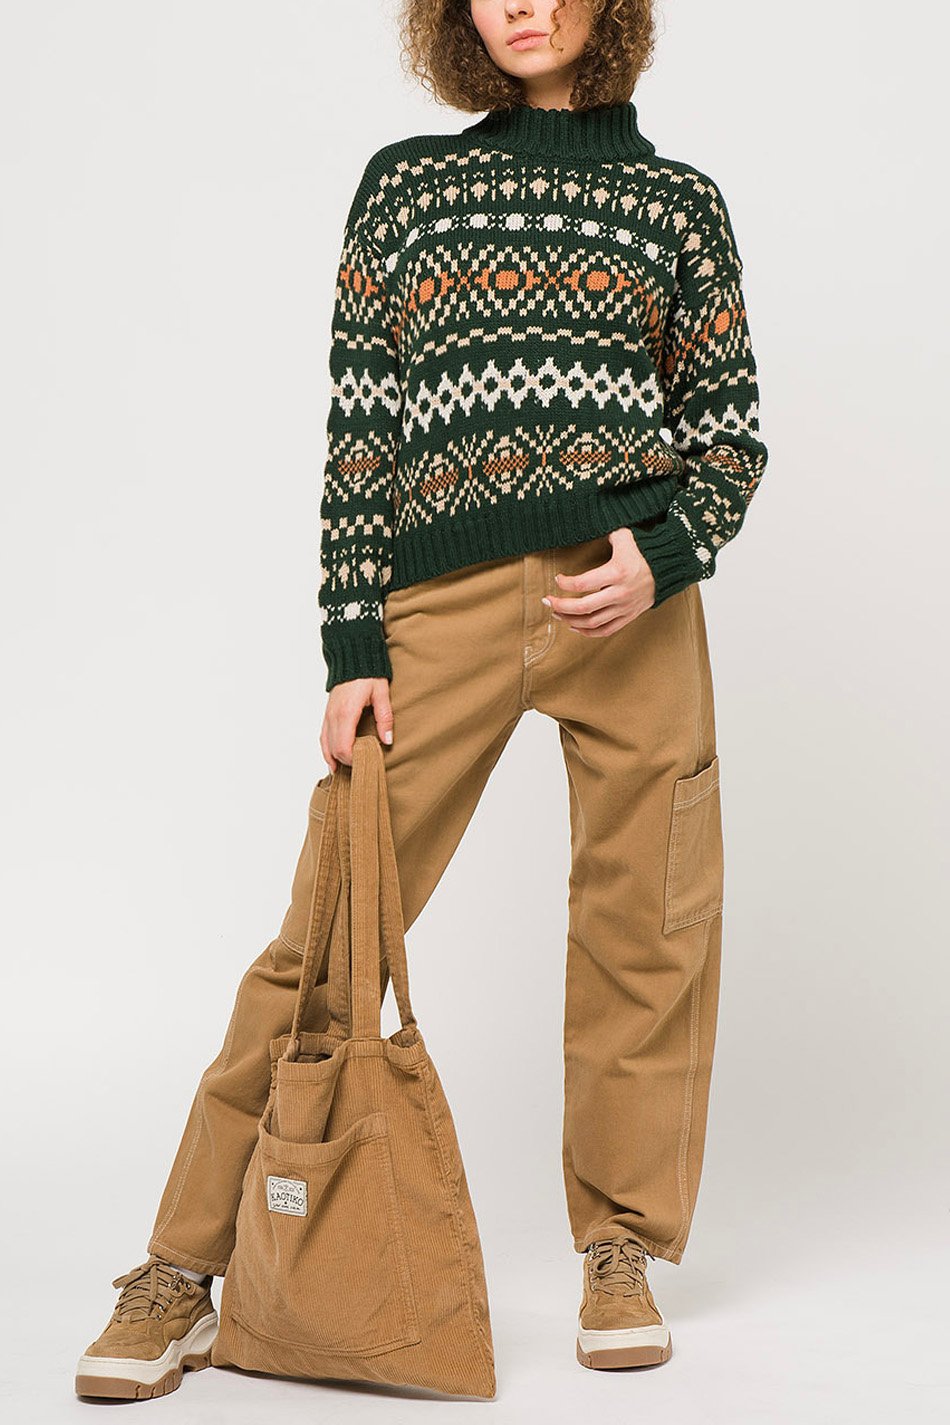 Jacquard Strick- Sweater in Grün